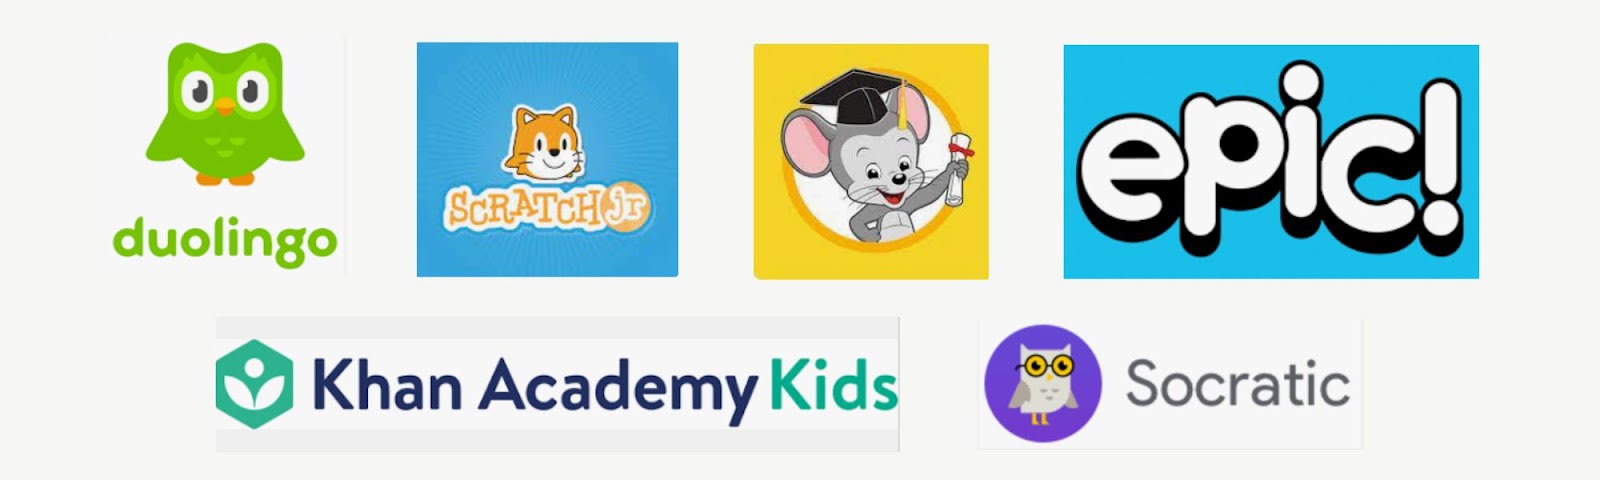 educational apps for kids